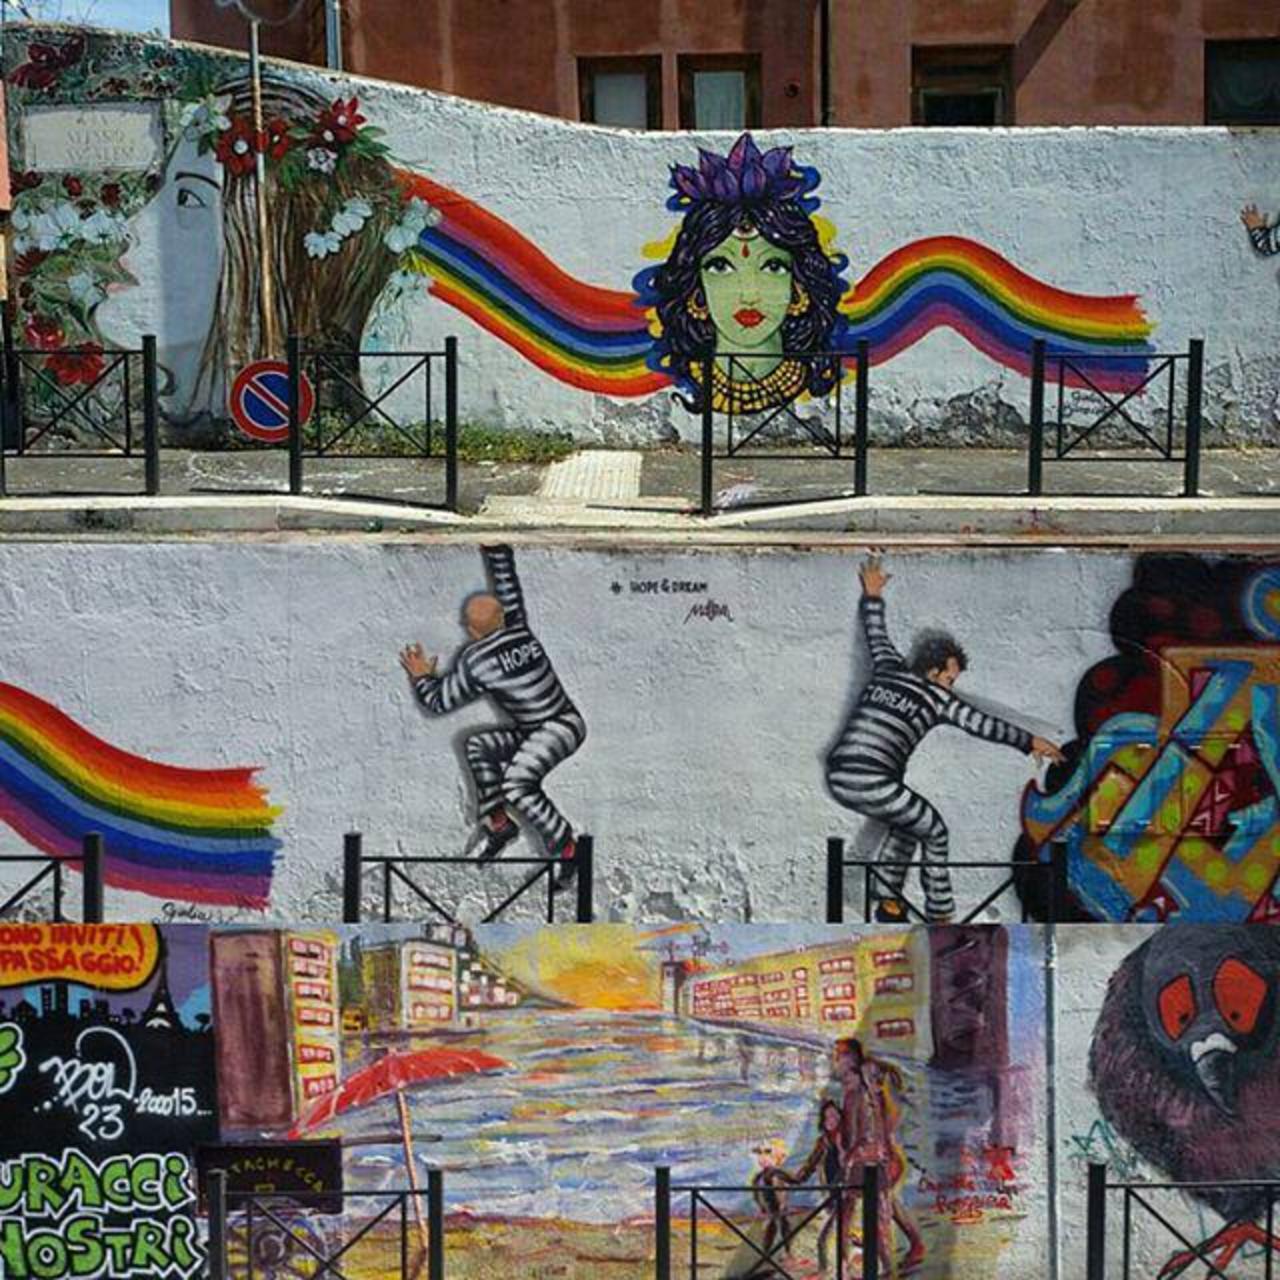 
#streetart #art #urbanart #graffiti #streetarteverywhere #mural #street #urban #streetstyle #wall #street_artne… http://t.co/AqSouBkOAq